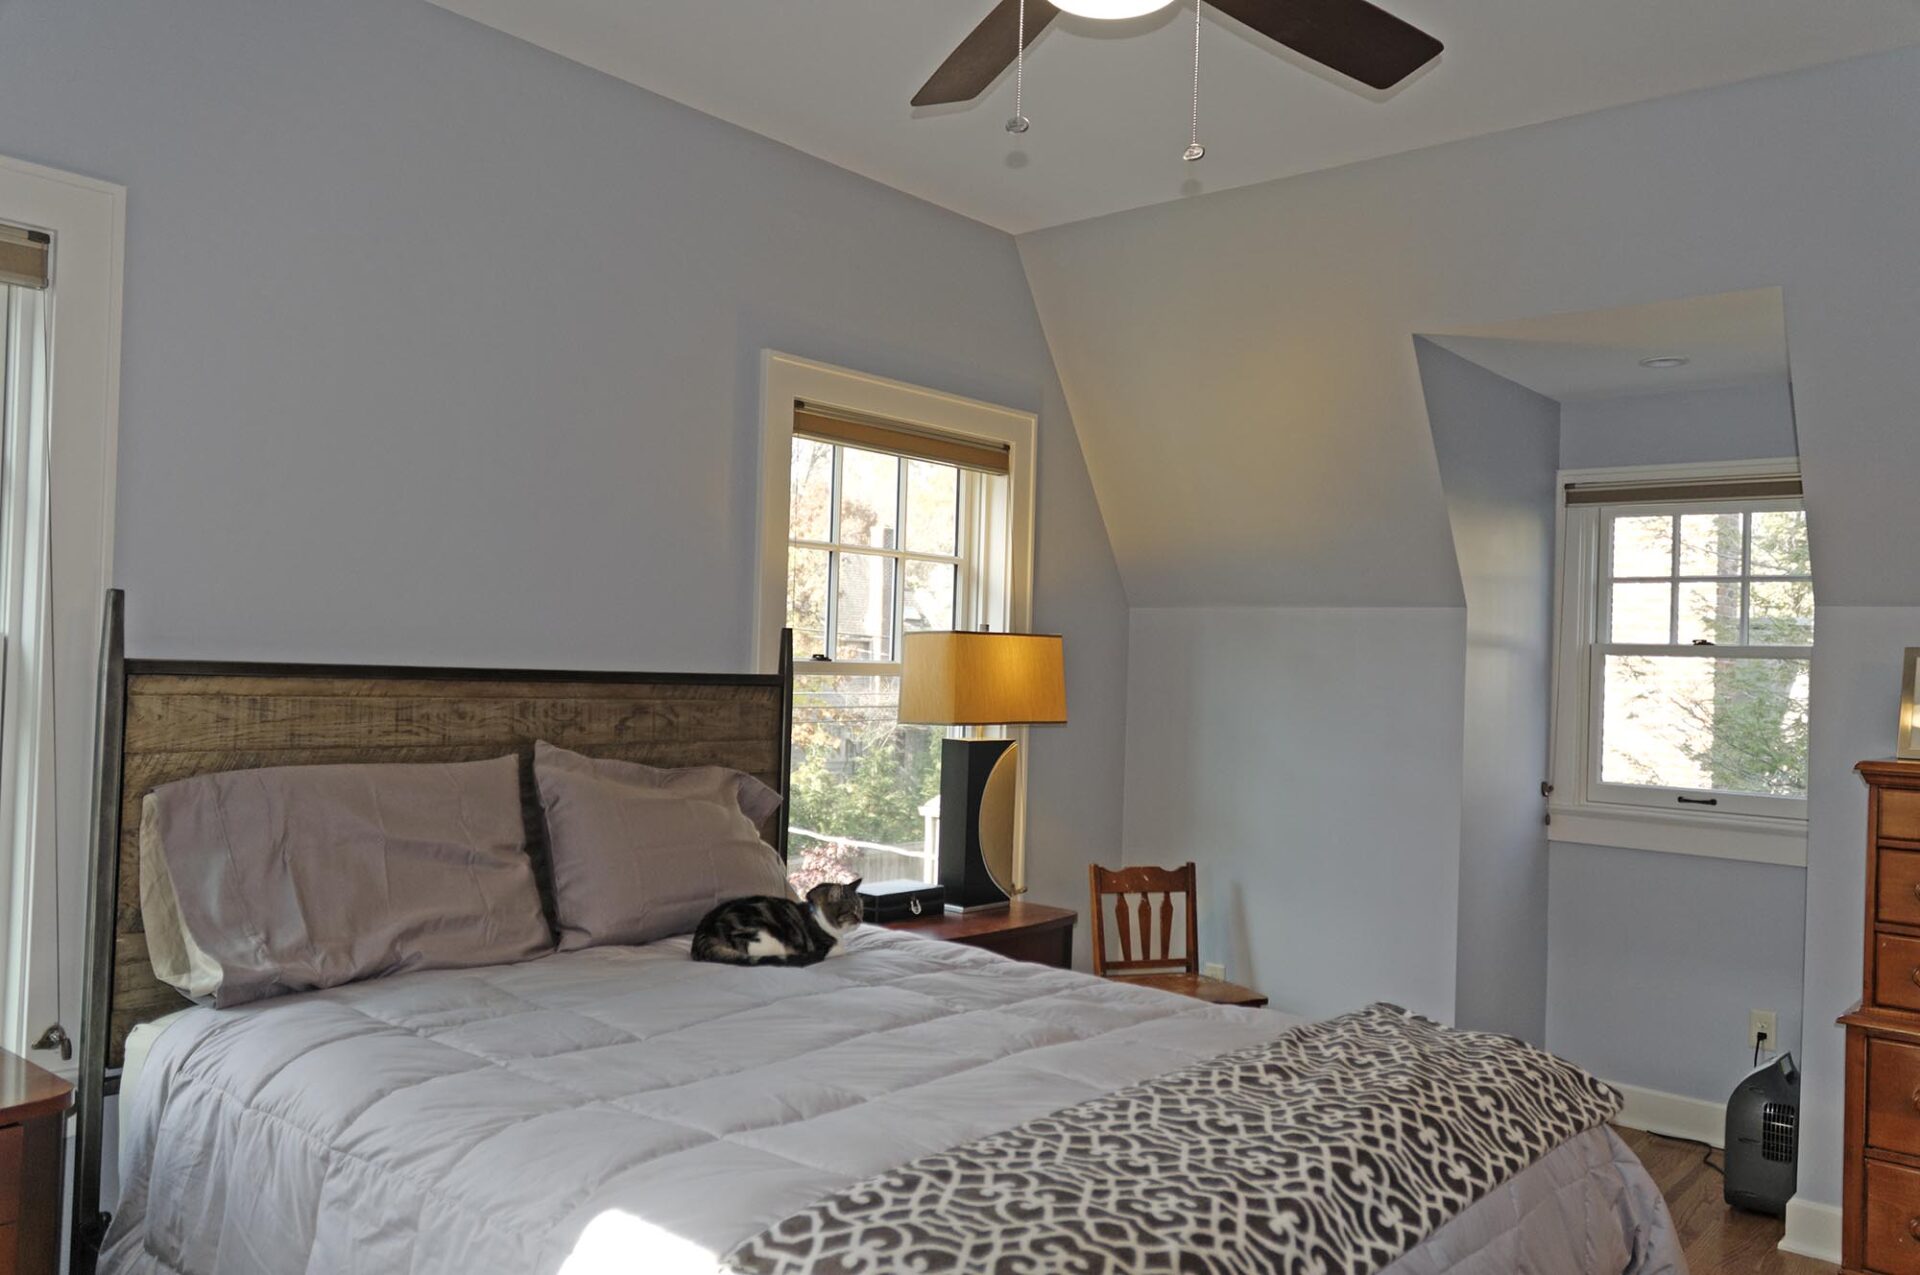 Bedroom, Upper Arlington, Dave Fox, Remodel